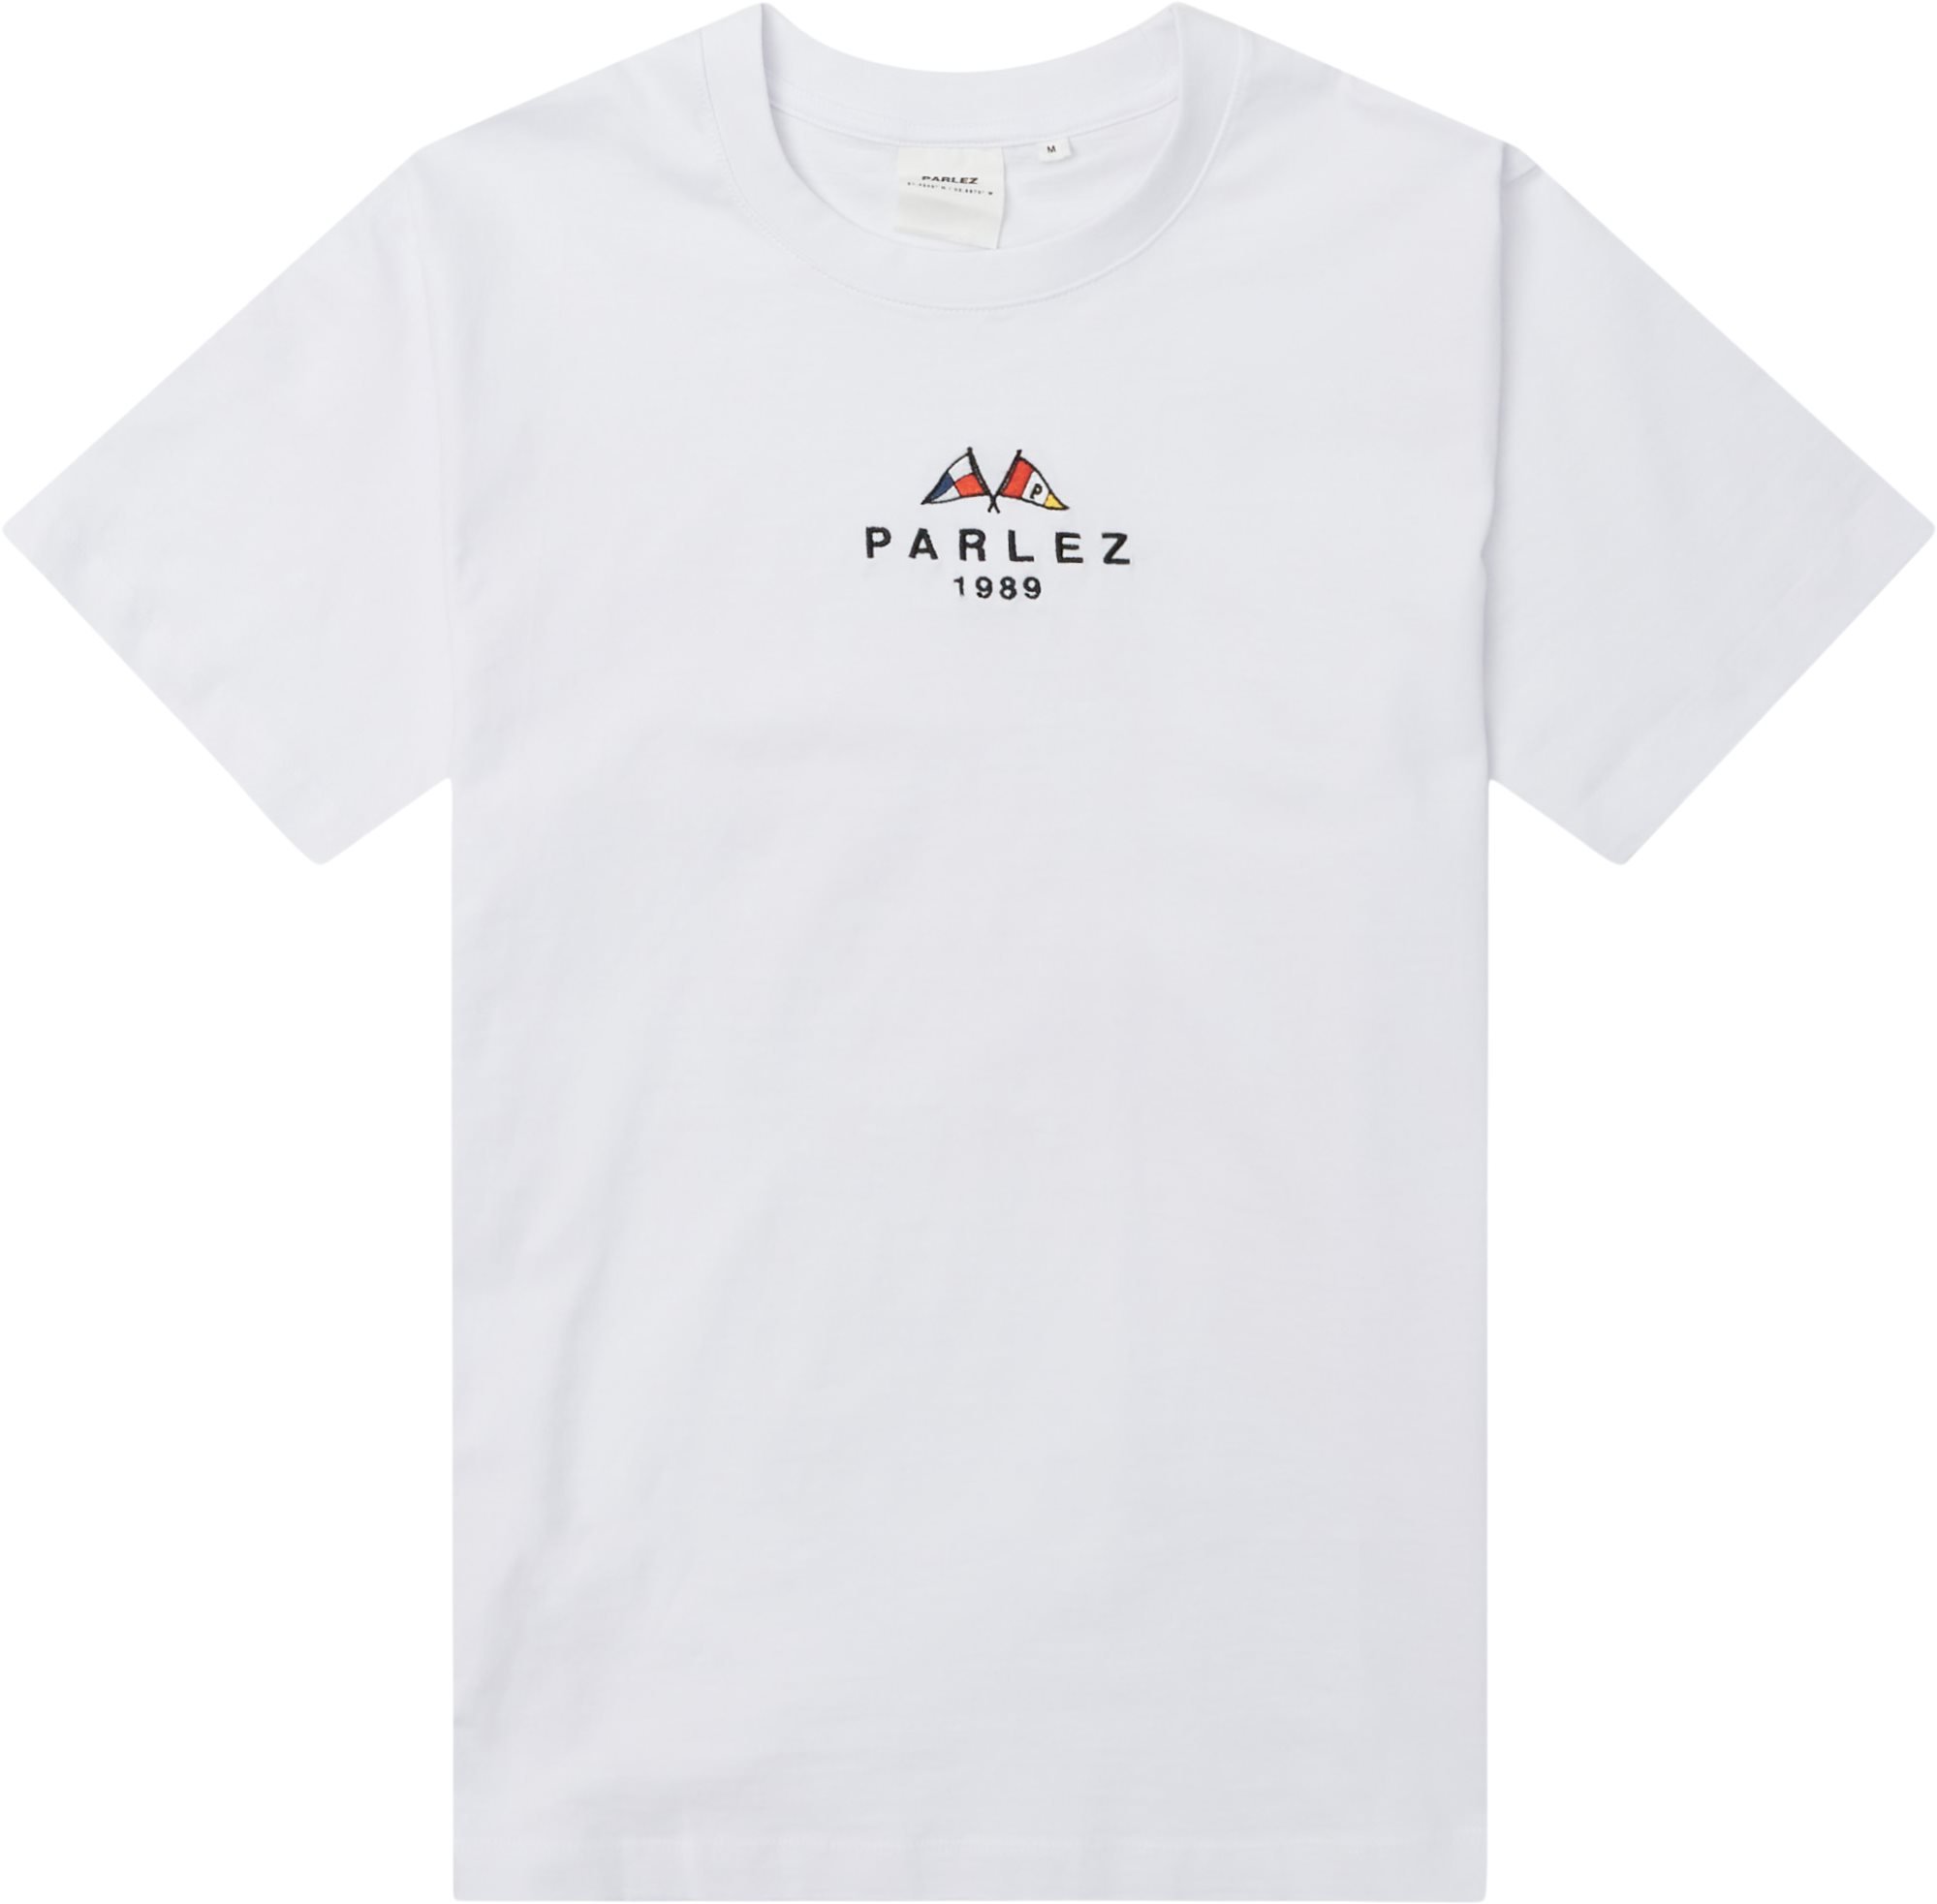 Iroko Tee - T-shirts - Regular fit - White